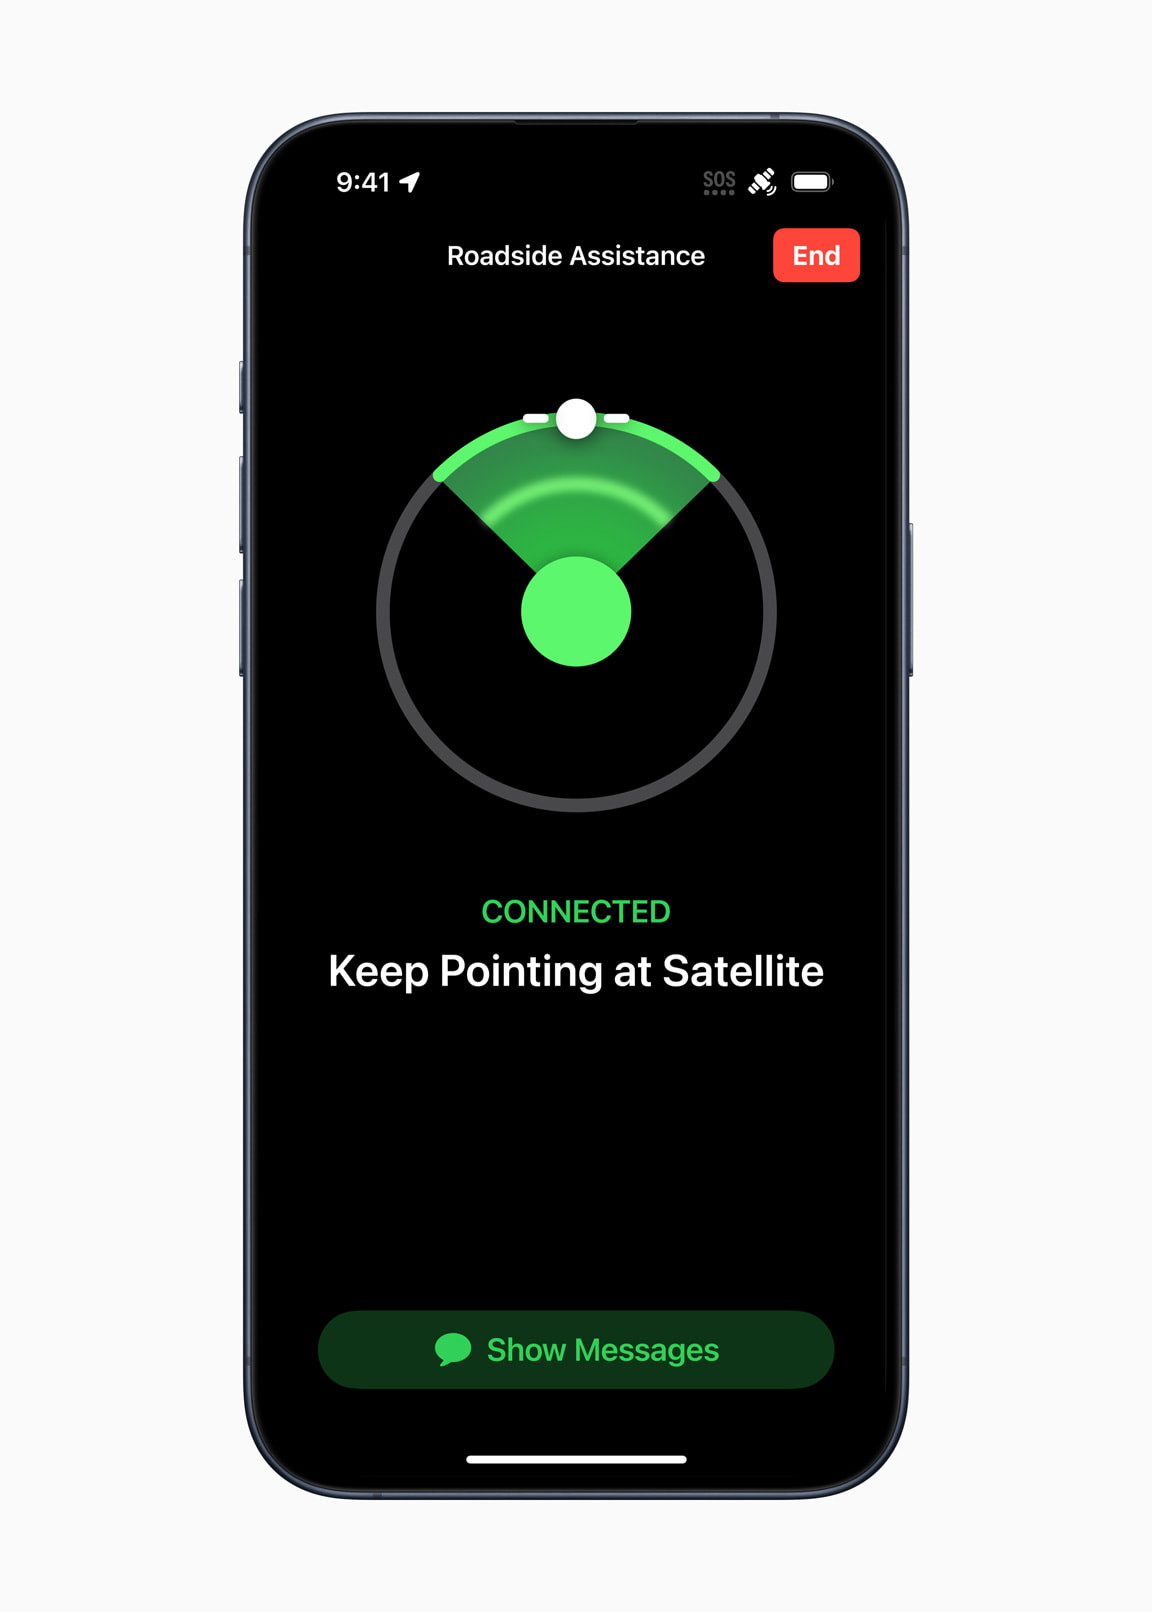 Apple launches Roadside Assistance via satellite